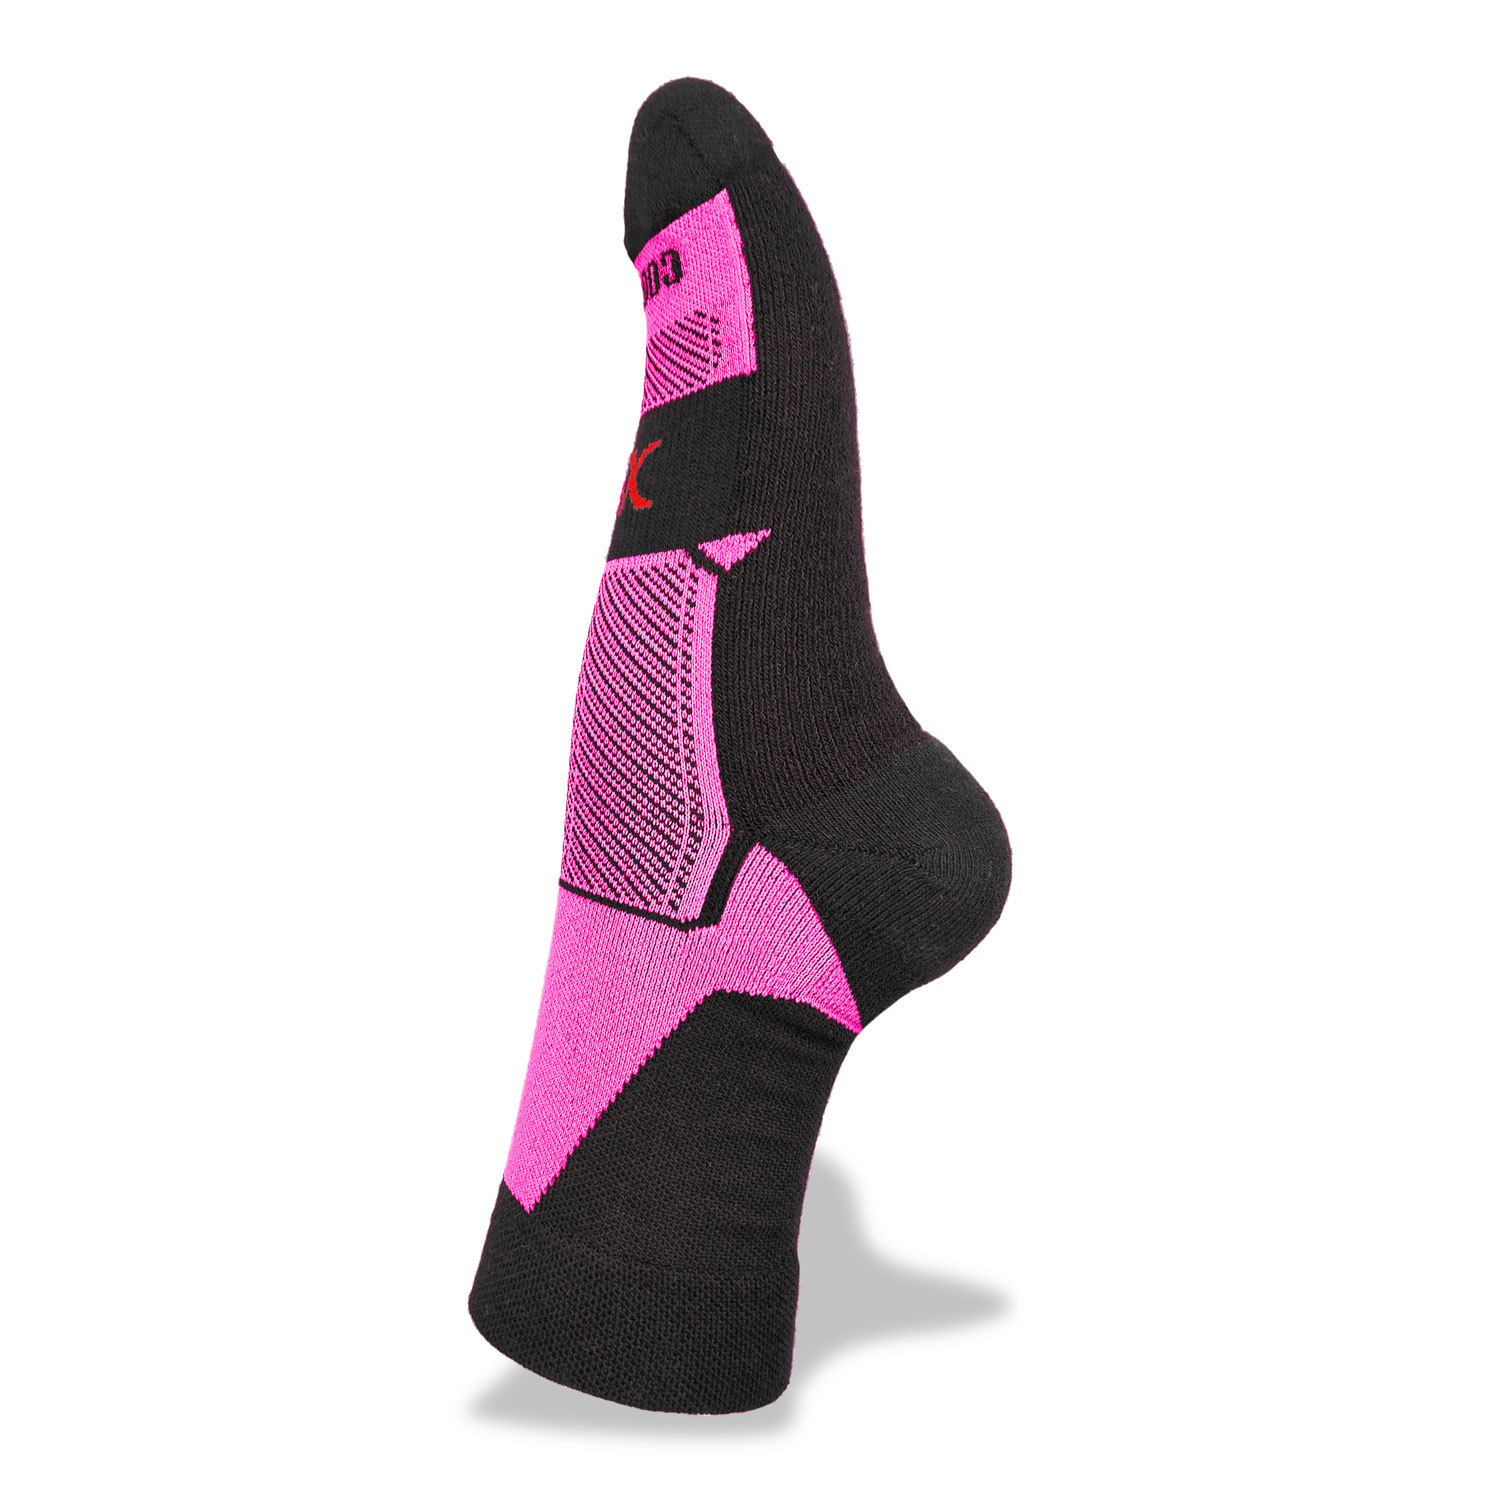 Womens Xstatic Race Socks Black/Pink